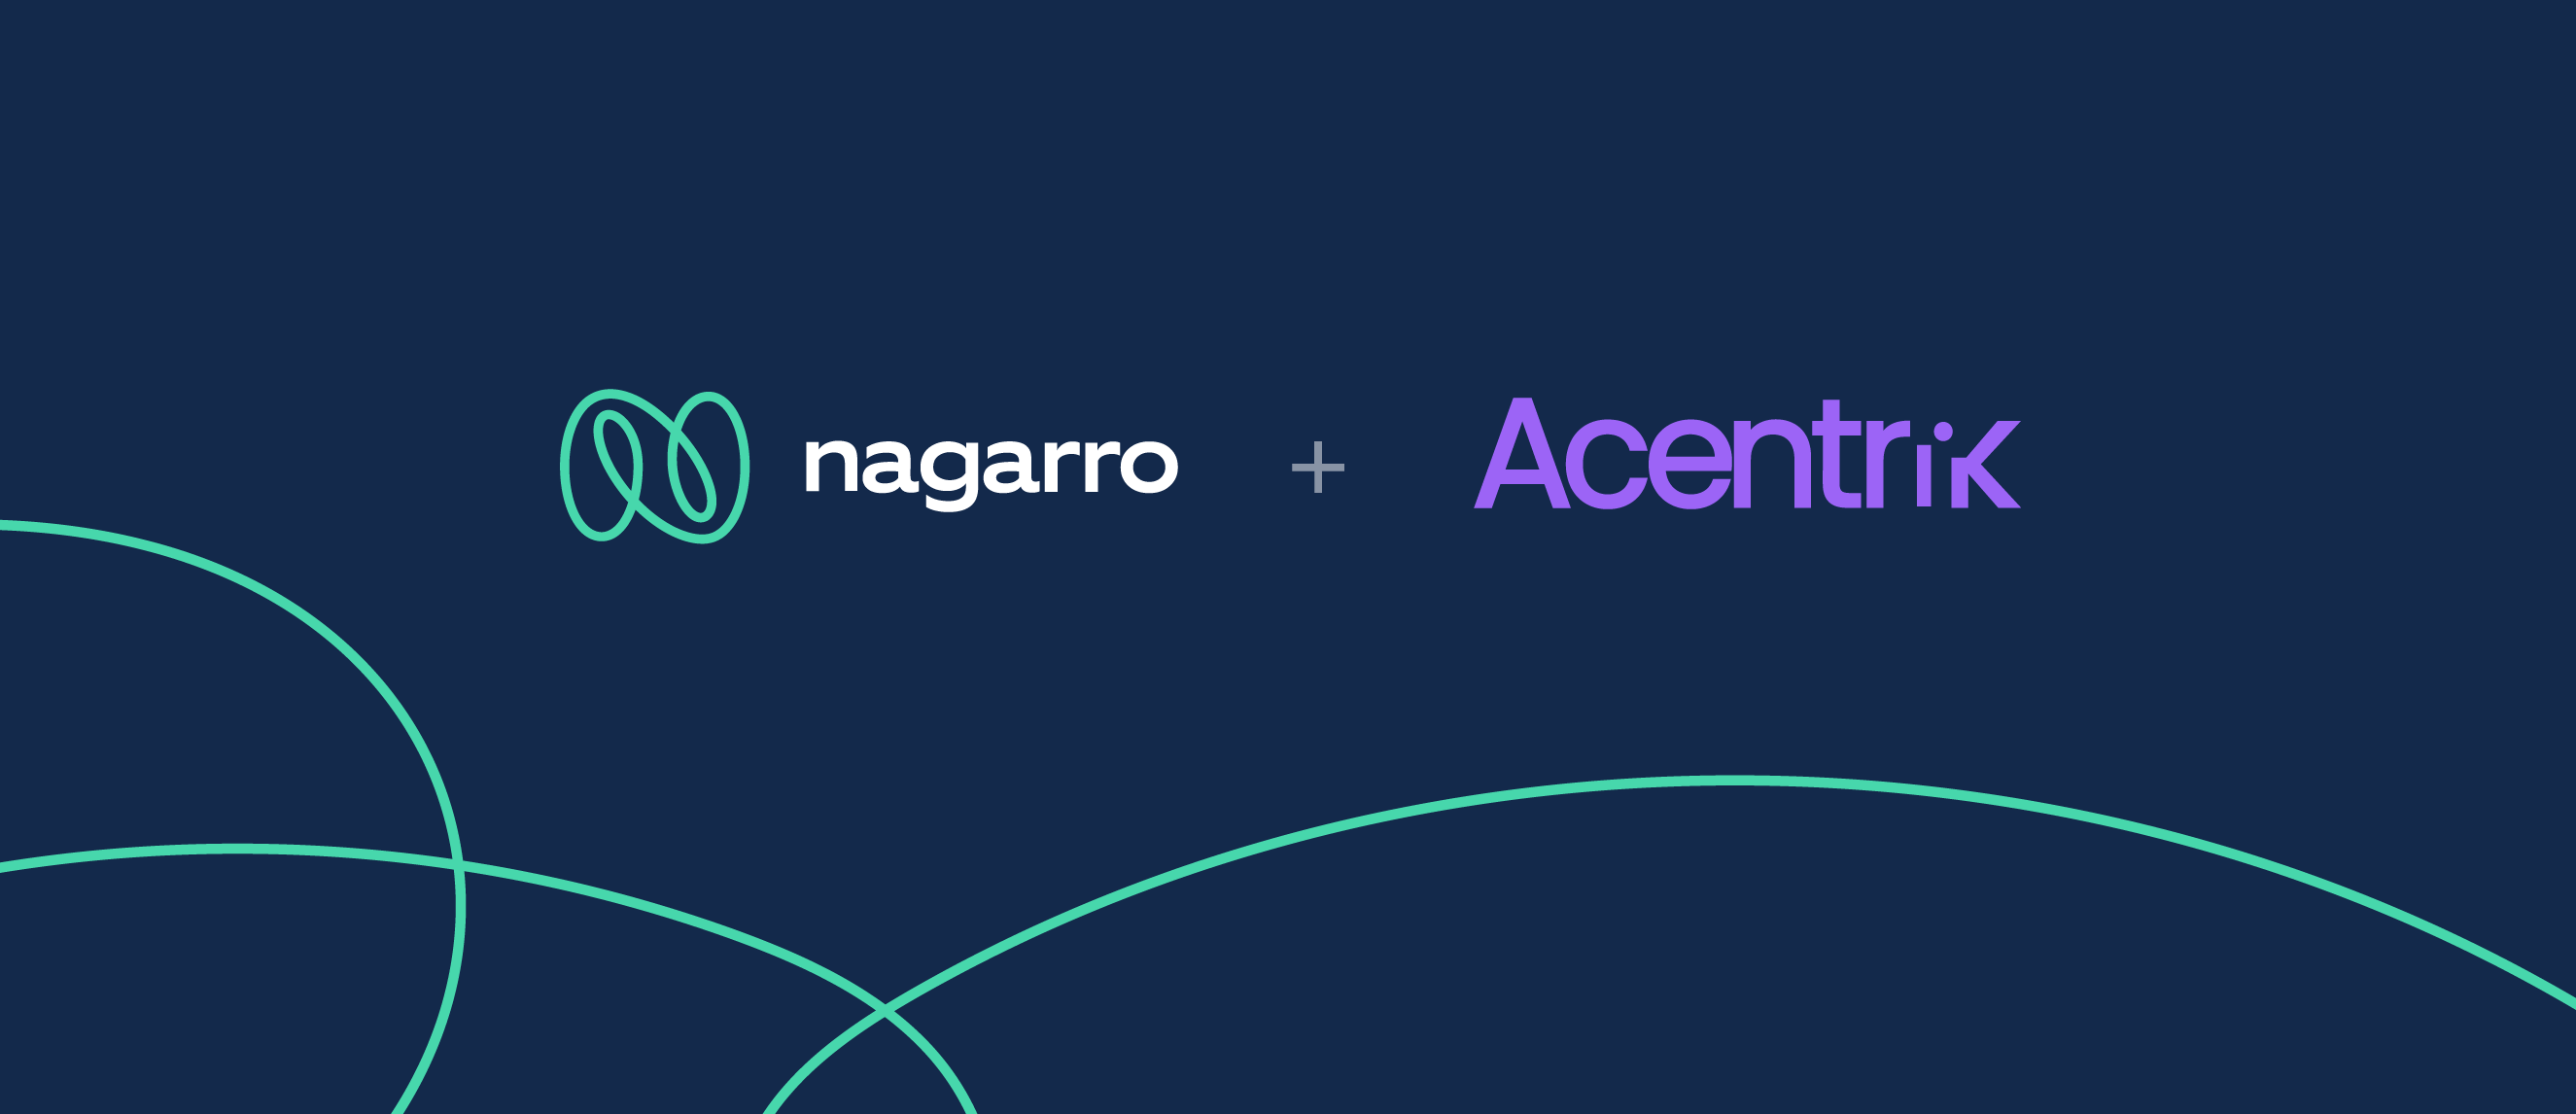 Nagarro collaborates with Acentrik, a strategic product of Mercedes-Benz